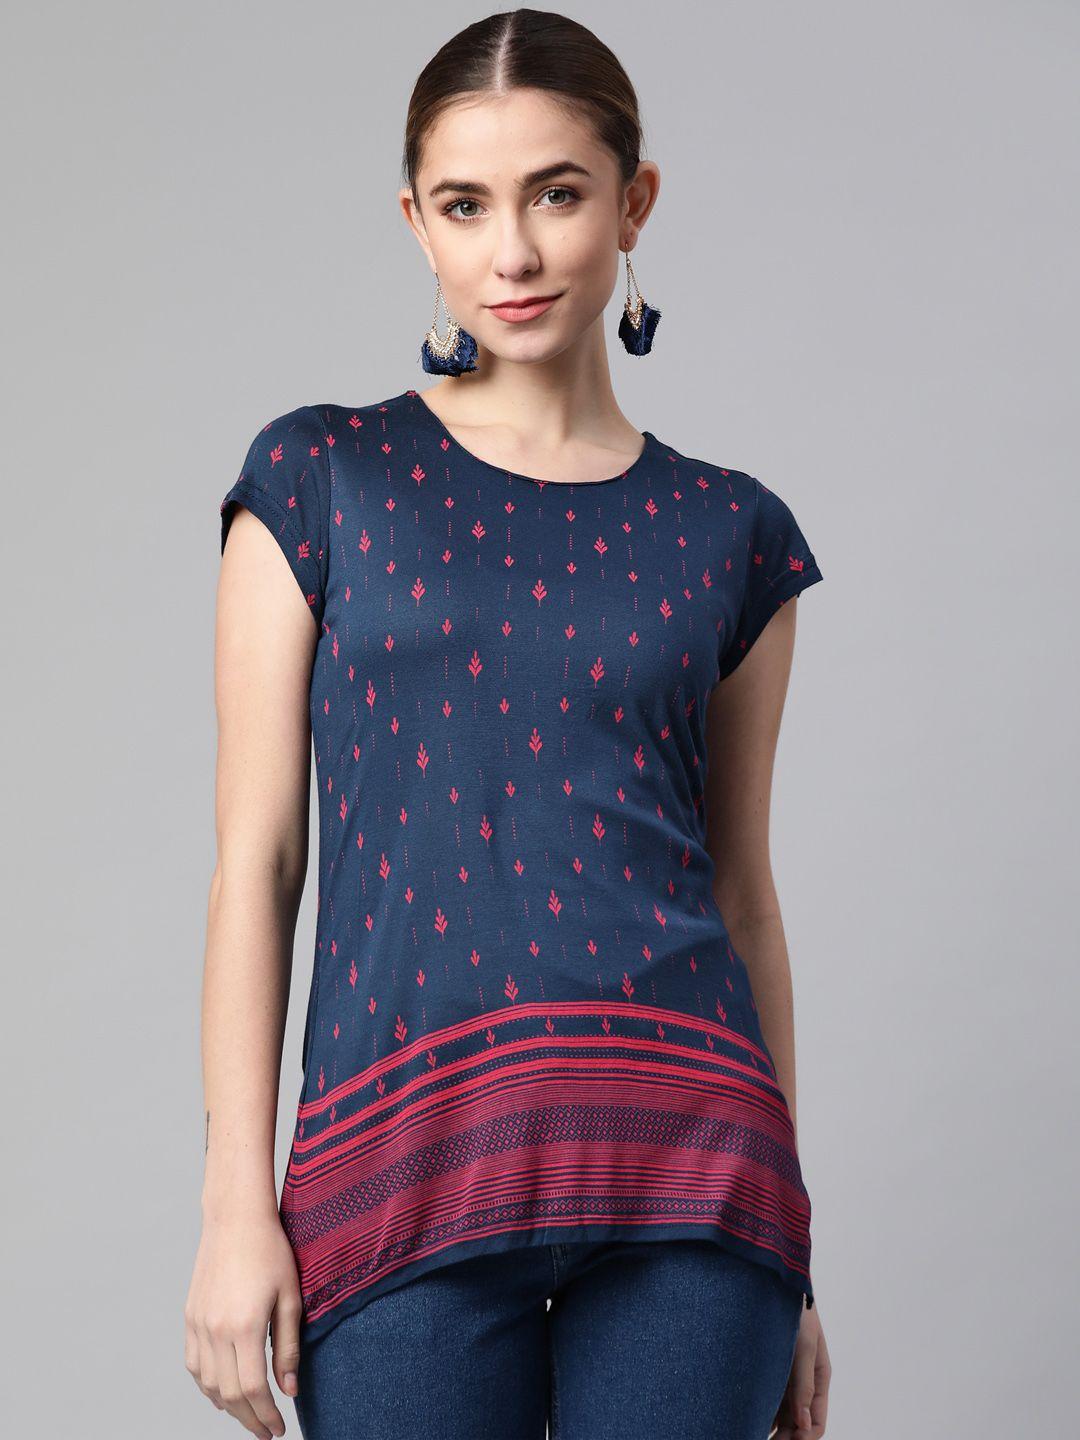 rangriti navy blue & red ethnic print top